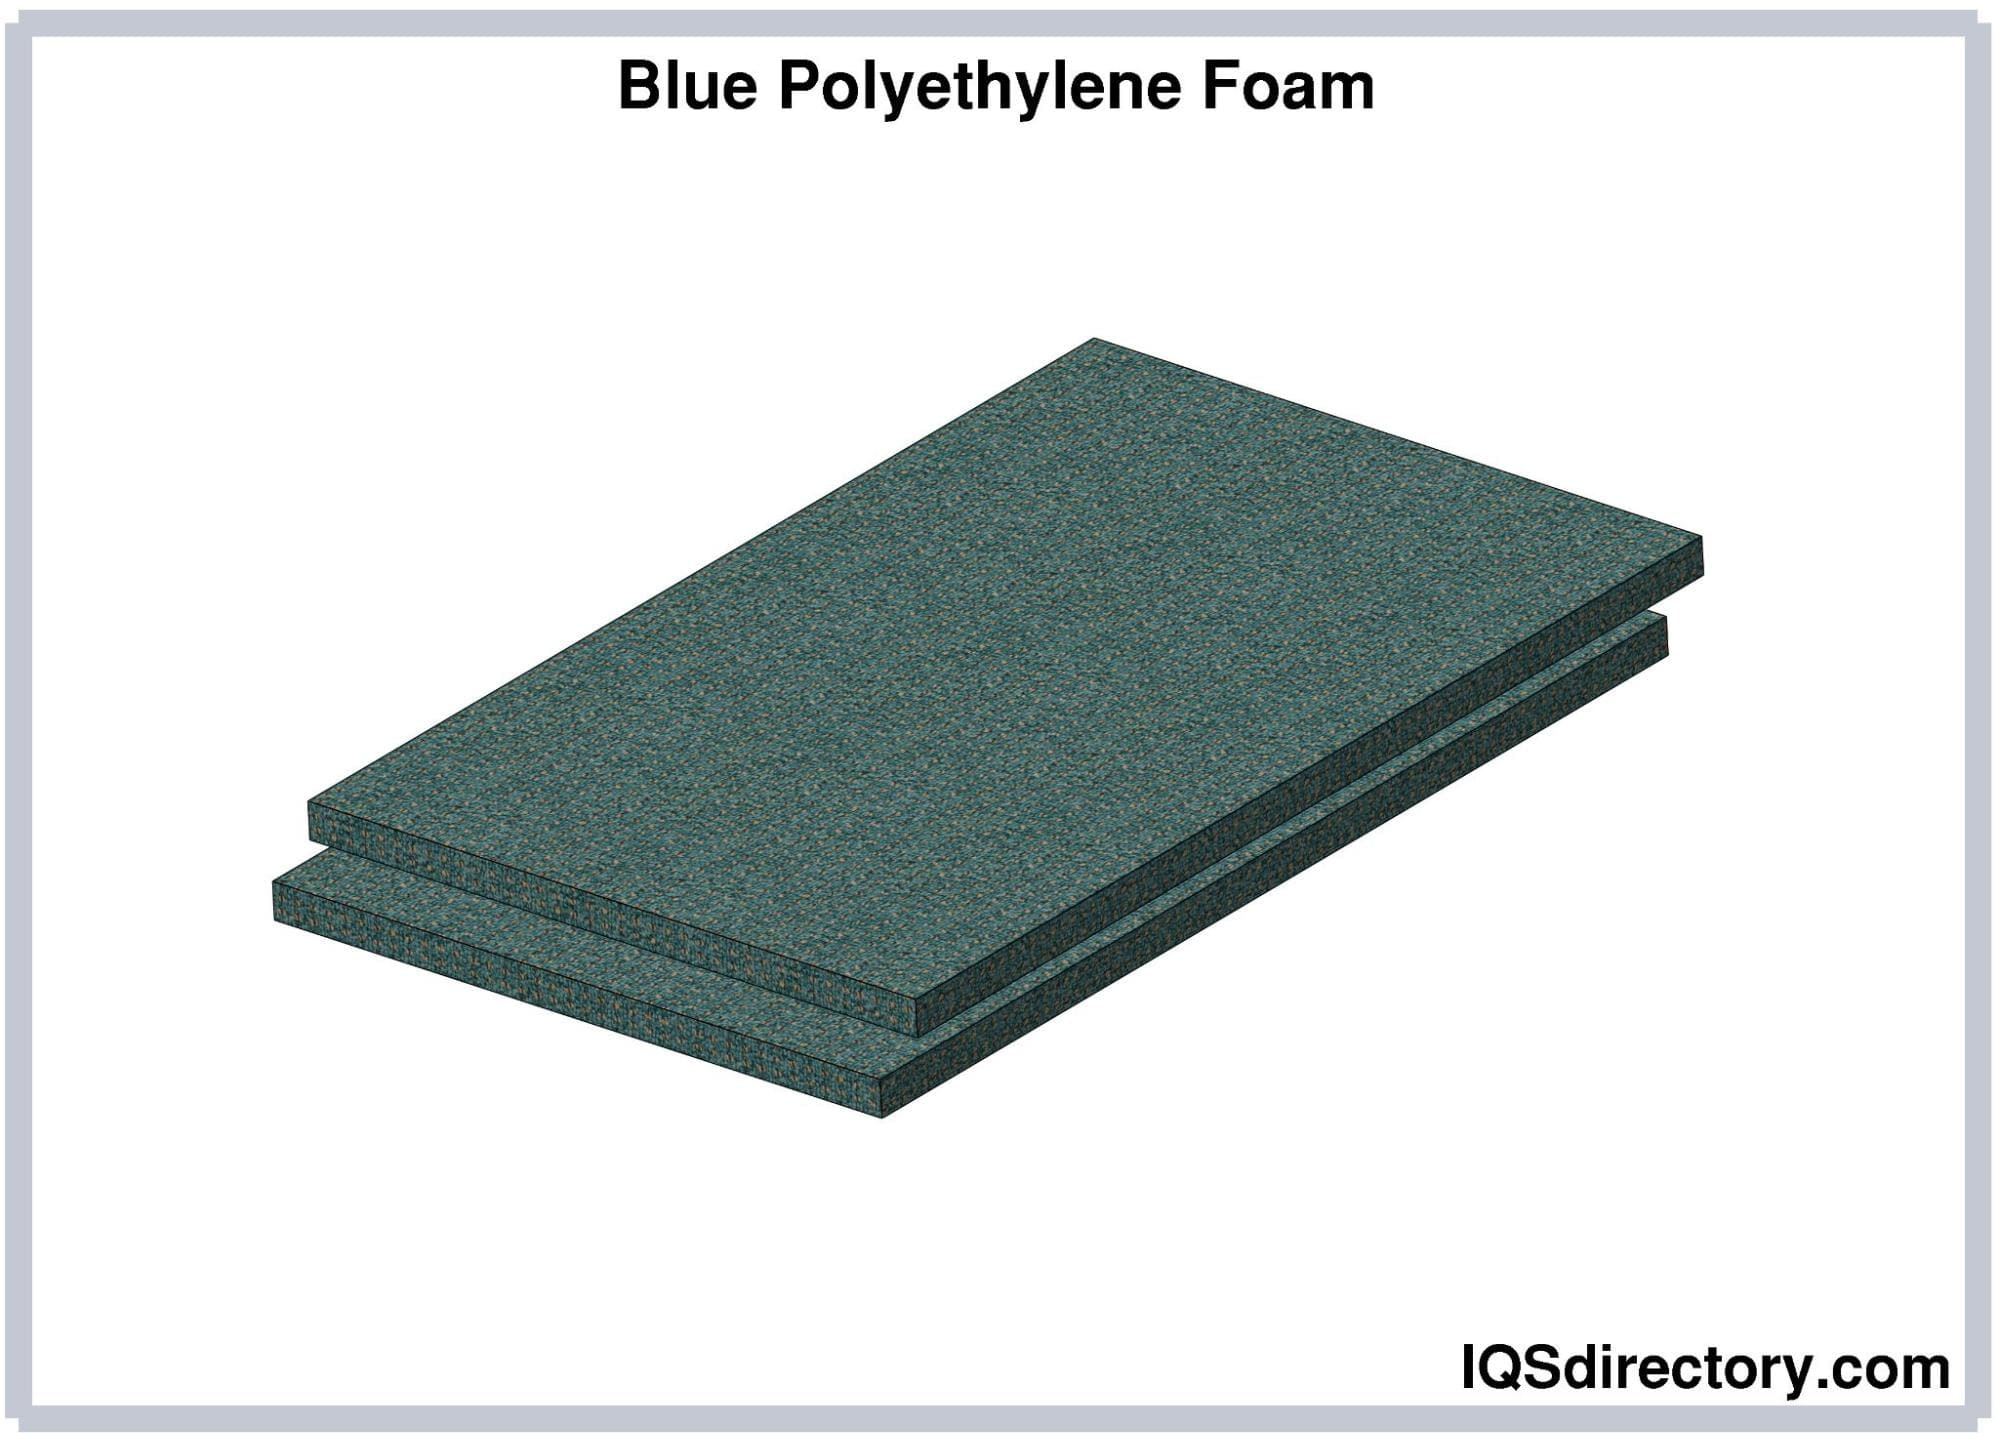 Blue Polyethylene Foam